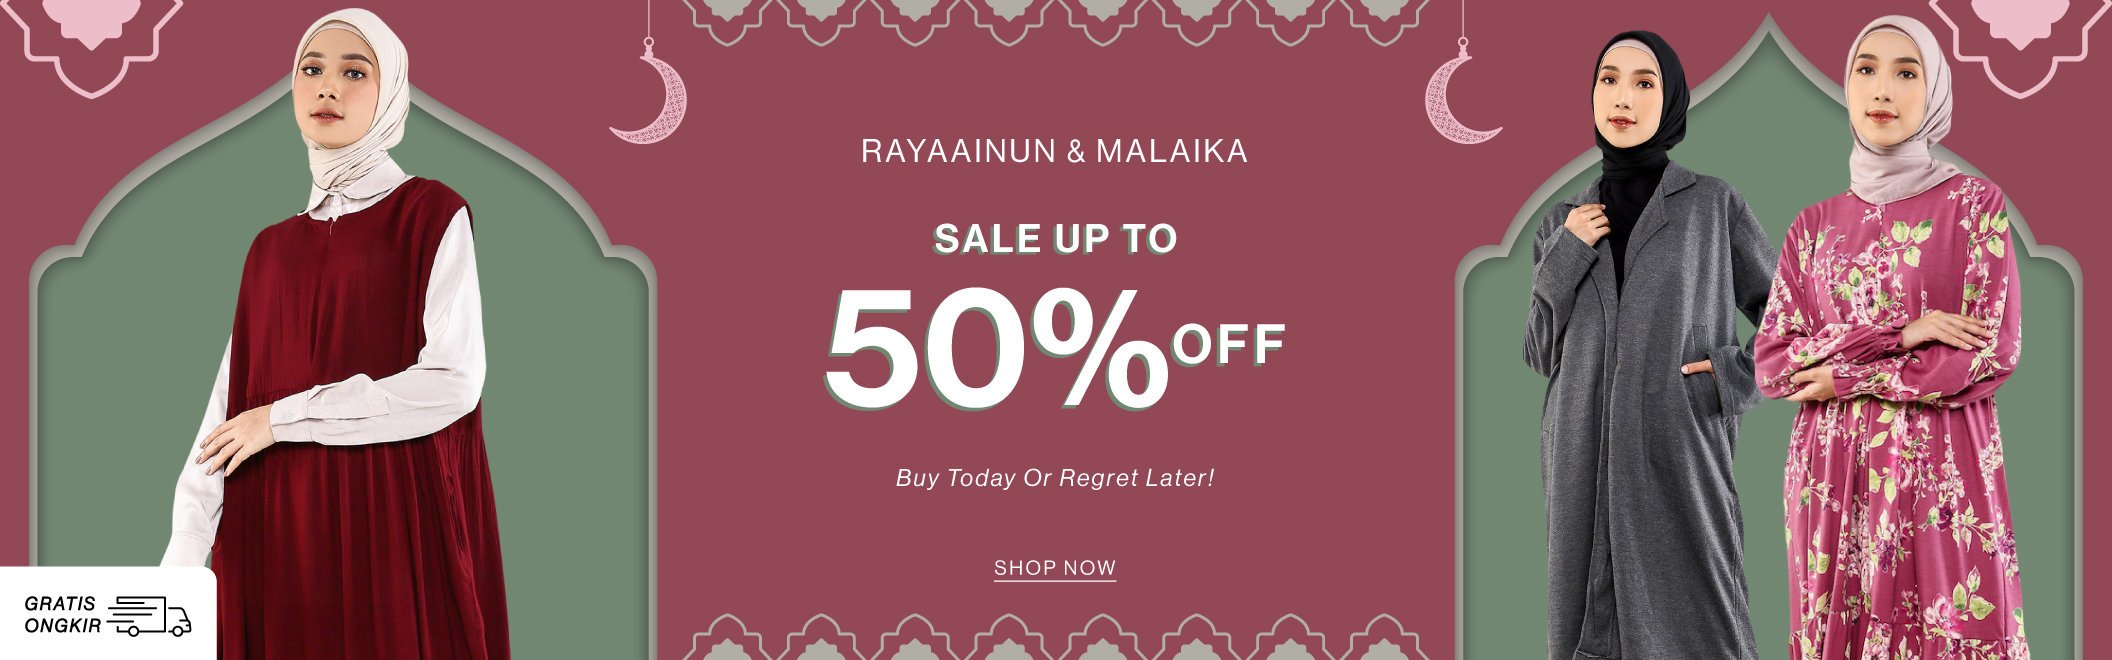 Rayaainun & Malaika Sale Up to 50%